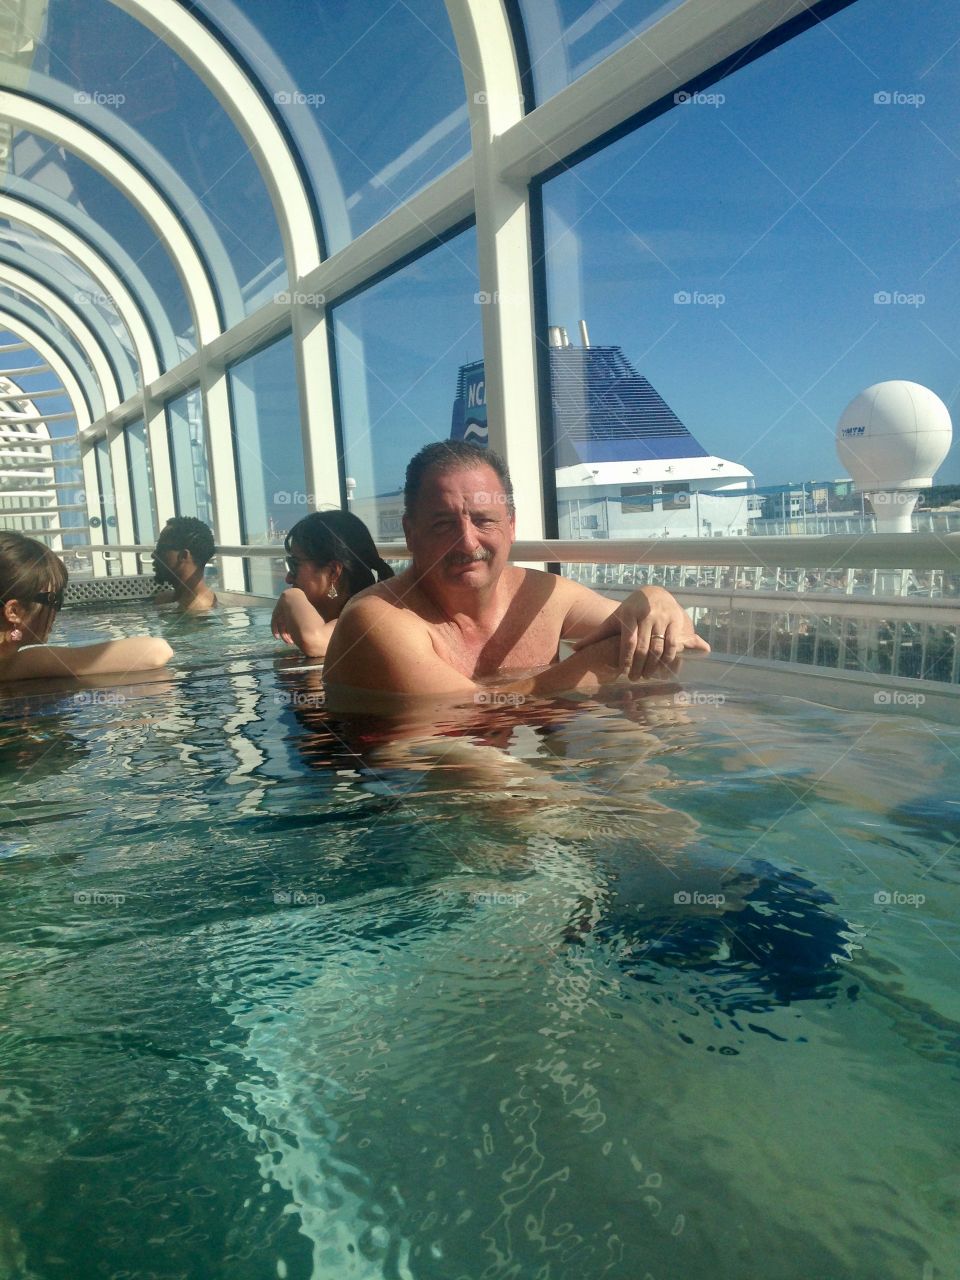 Nothing like a hot tub on a Disney  Cruise 